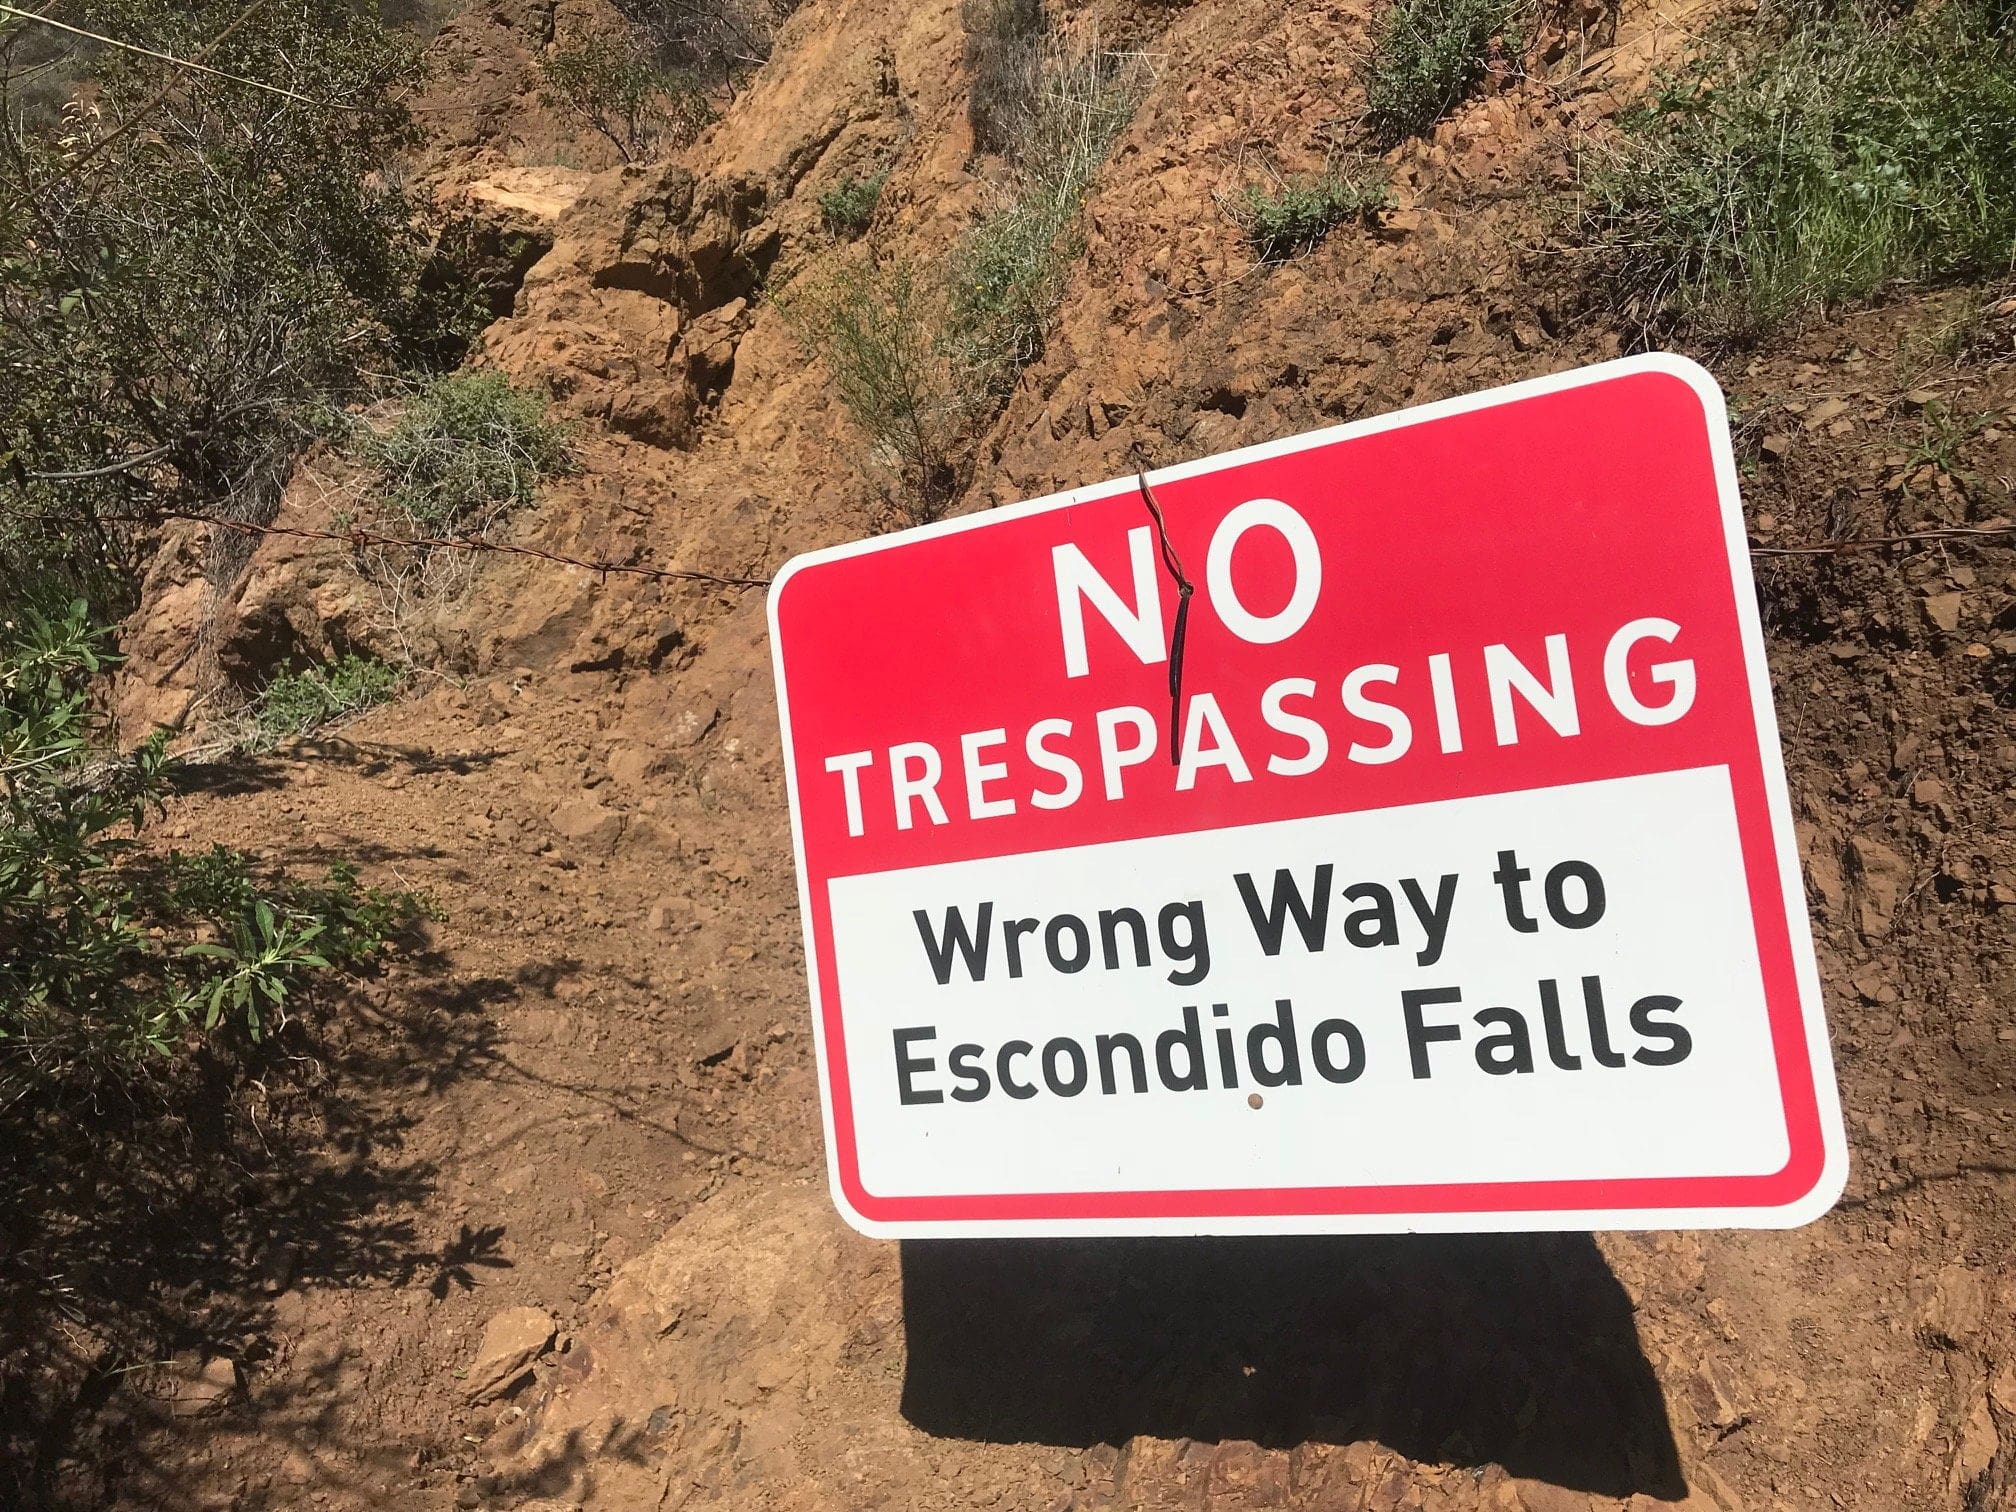 Escondido Falls private propertyu